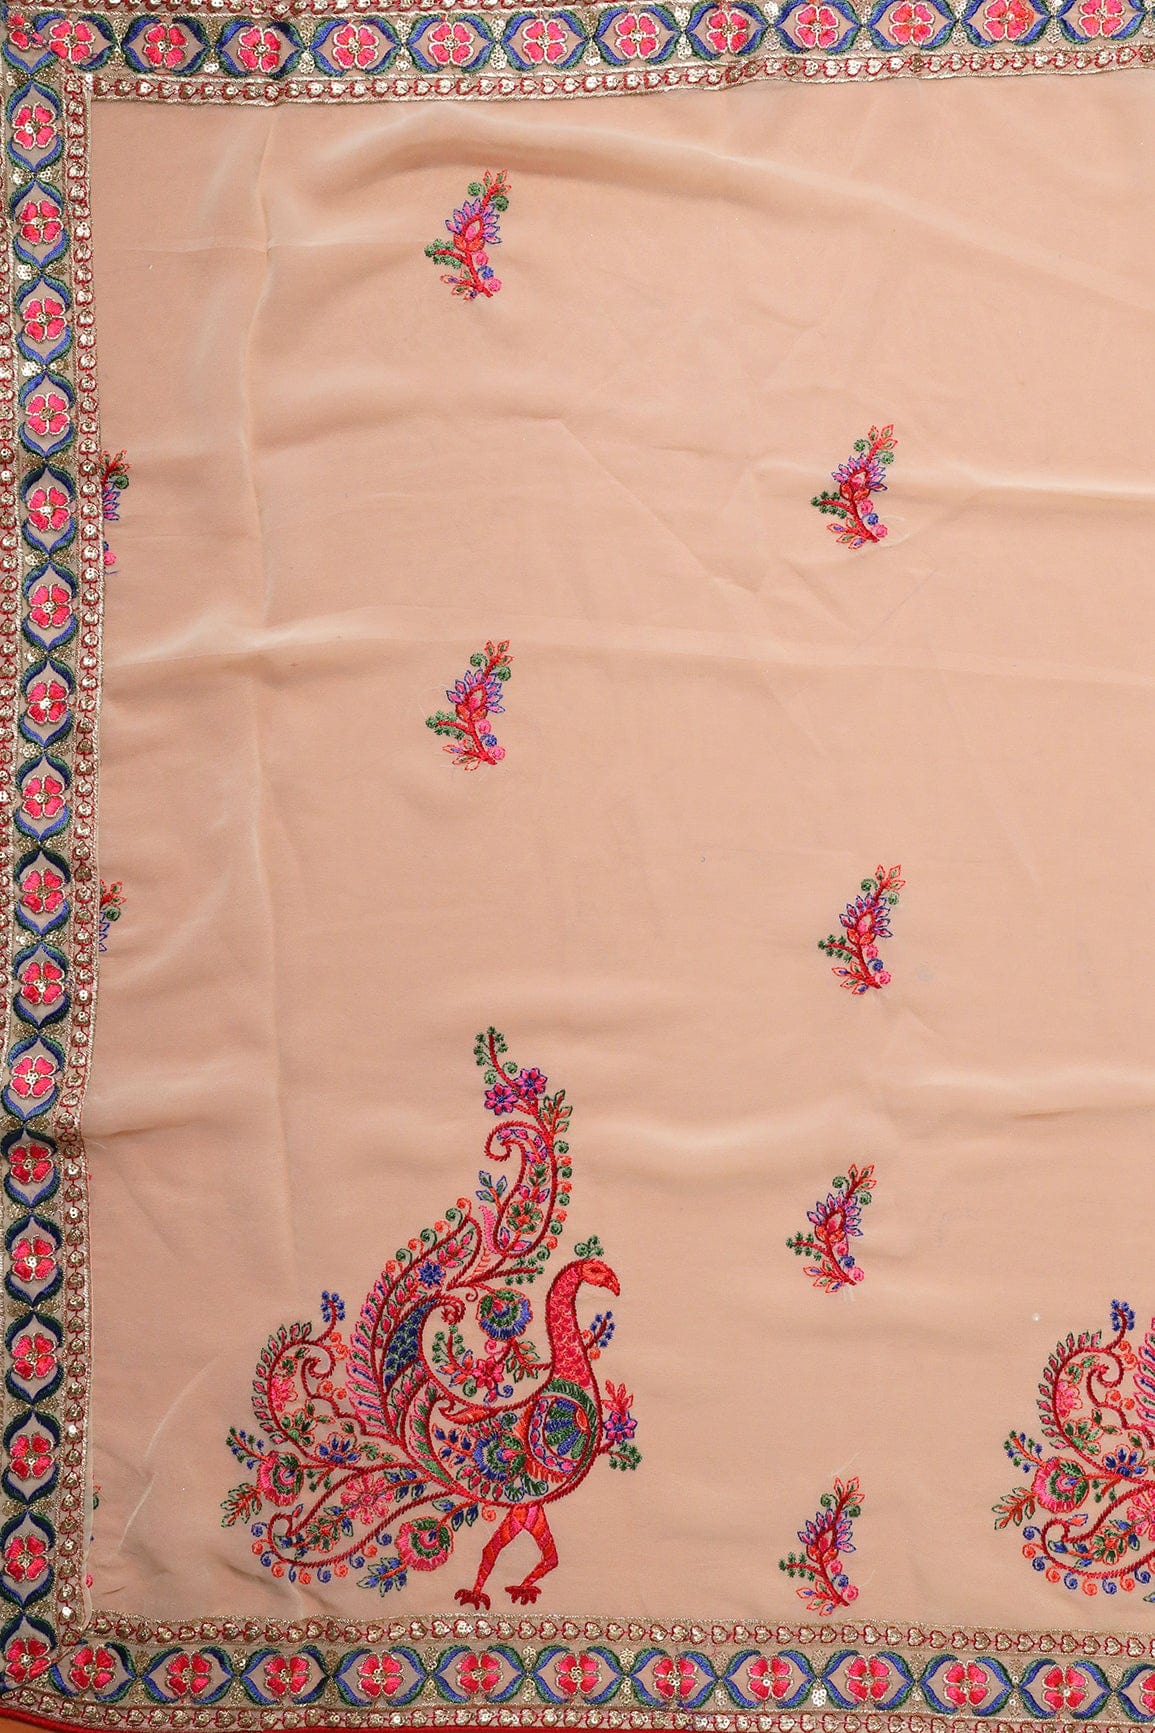 doeraa Dupatta Multi Thread With Gold Zari Floral Embroidery Work On Beige Georgette Dupatta With Border